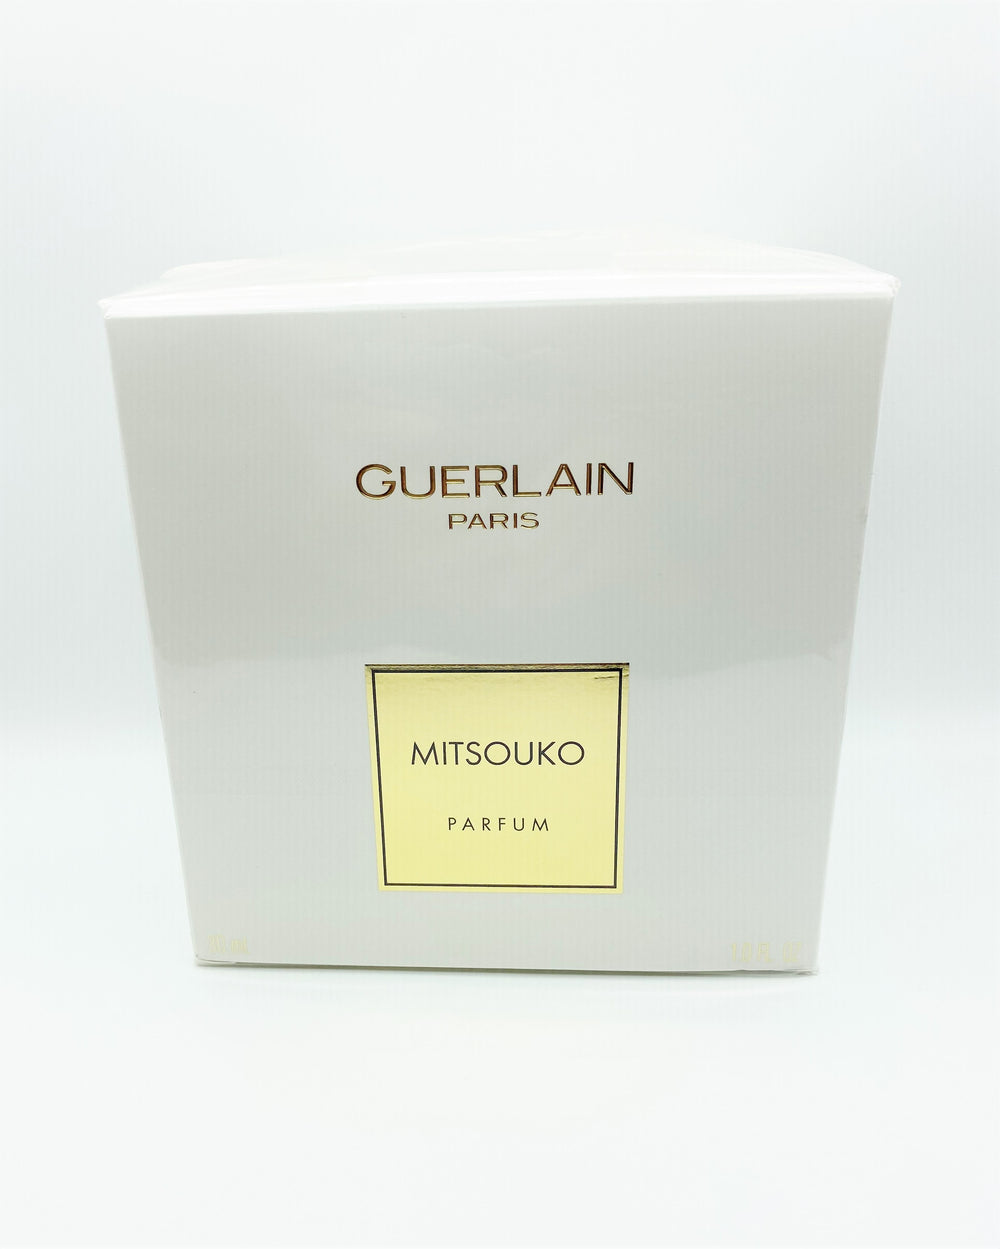 Mitsouko 1.0 OZ Parfum